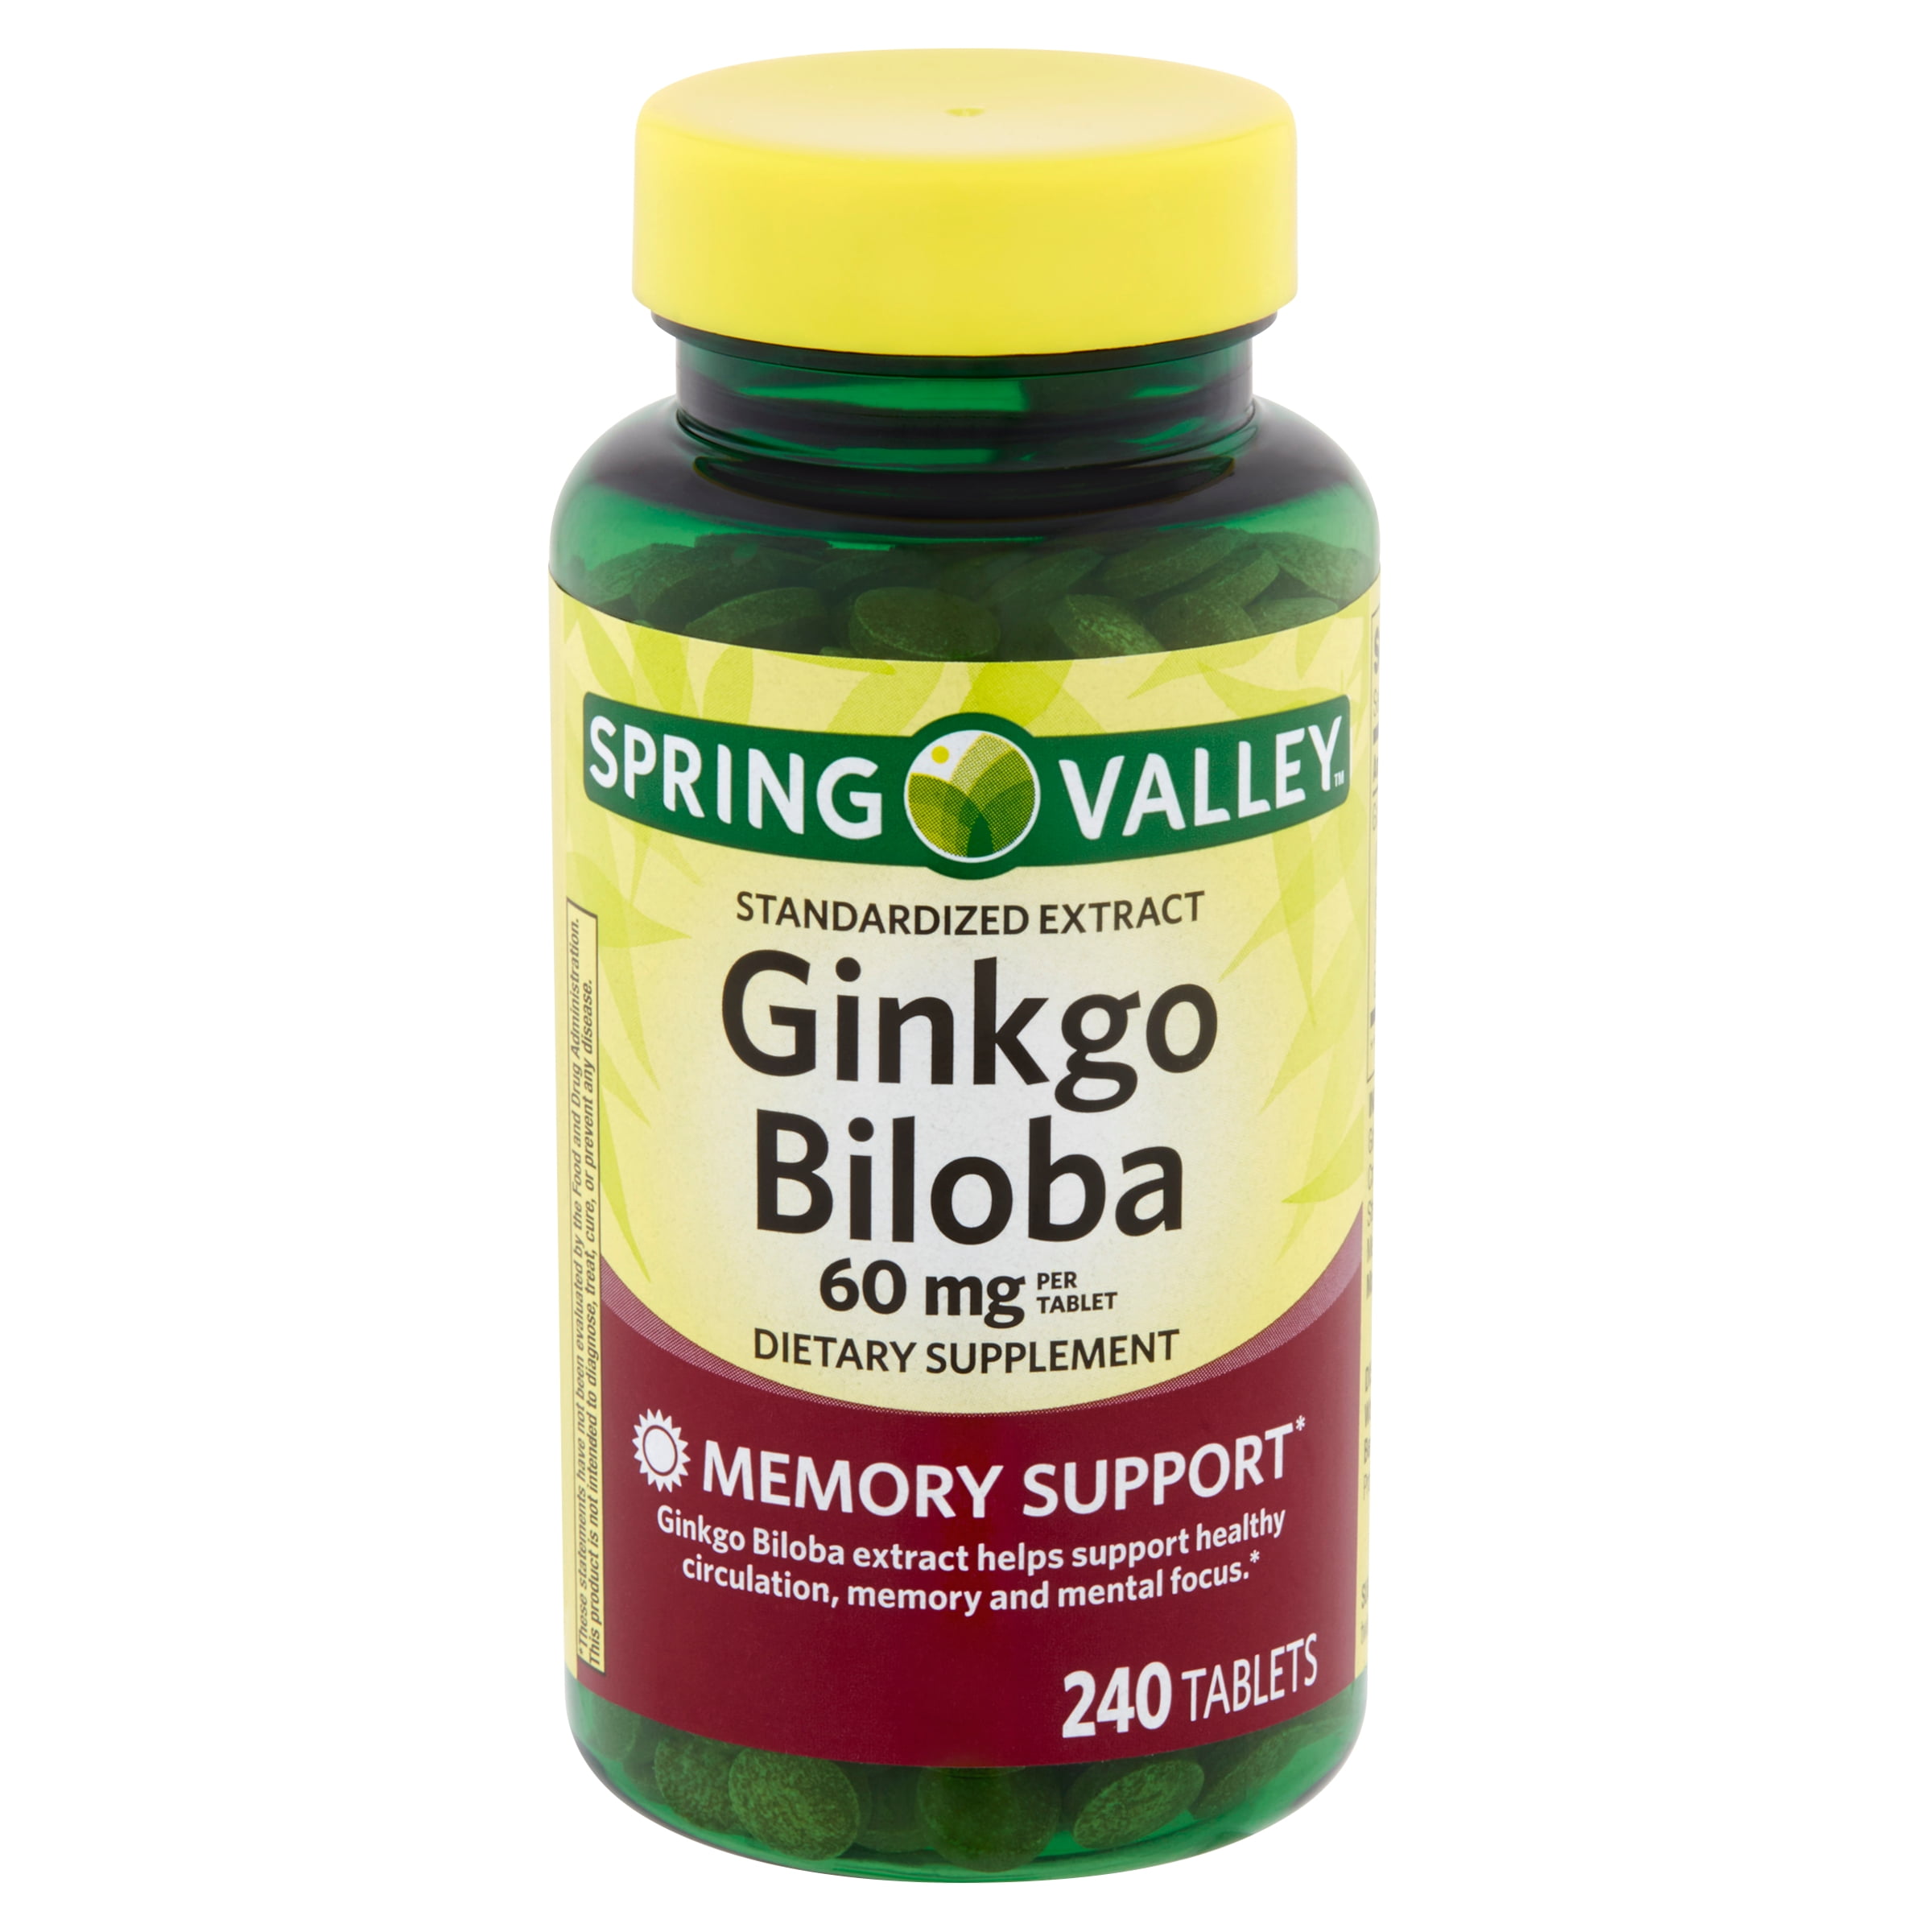 Orkaan Competitief Piepen Spring Valley Ginkgo Biloba Extract Tablets, 60 mg, 240 Count - Walmart.com